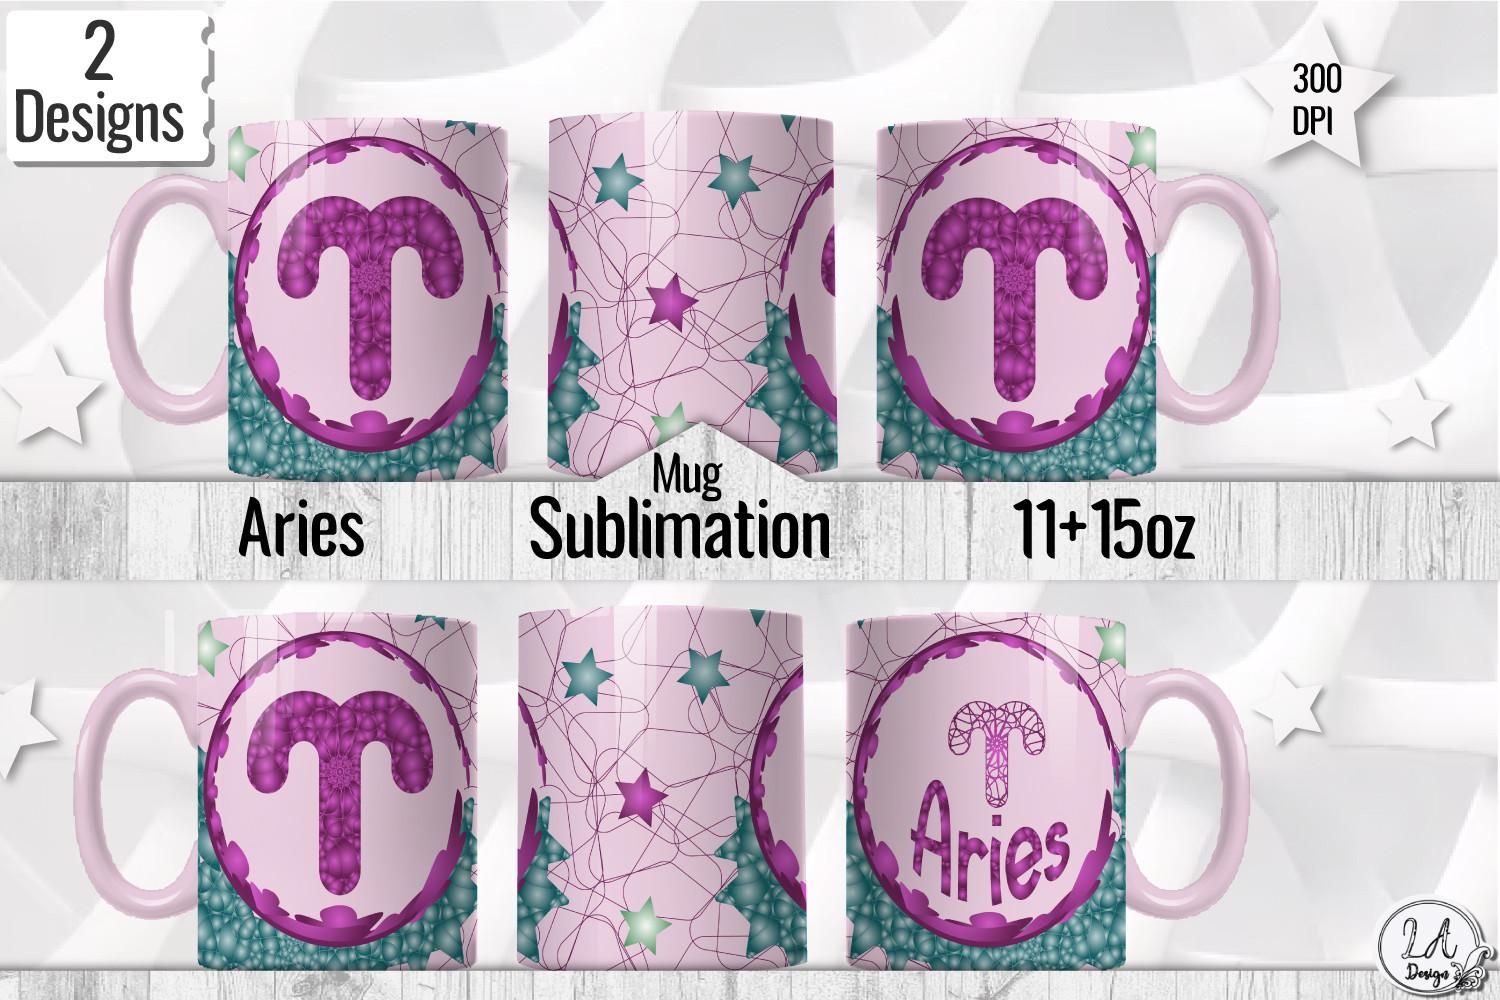 Aries. Mug Sublimation